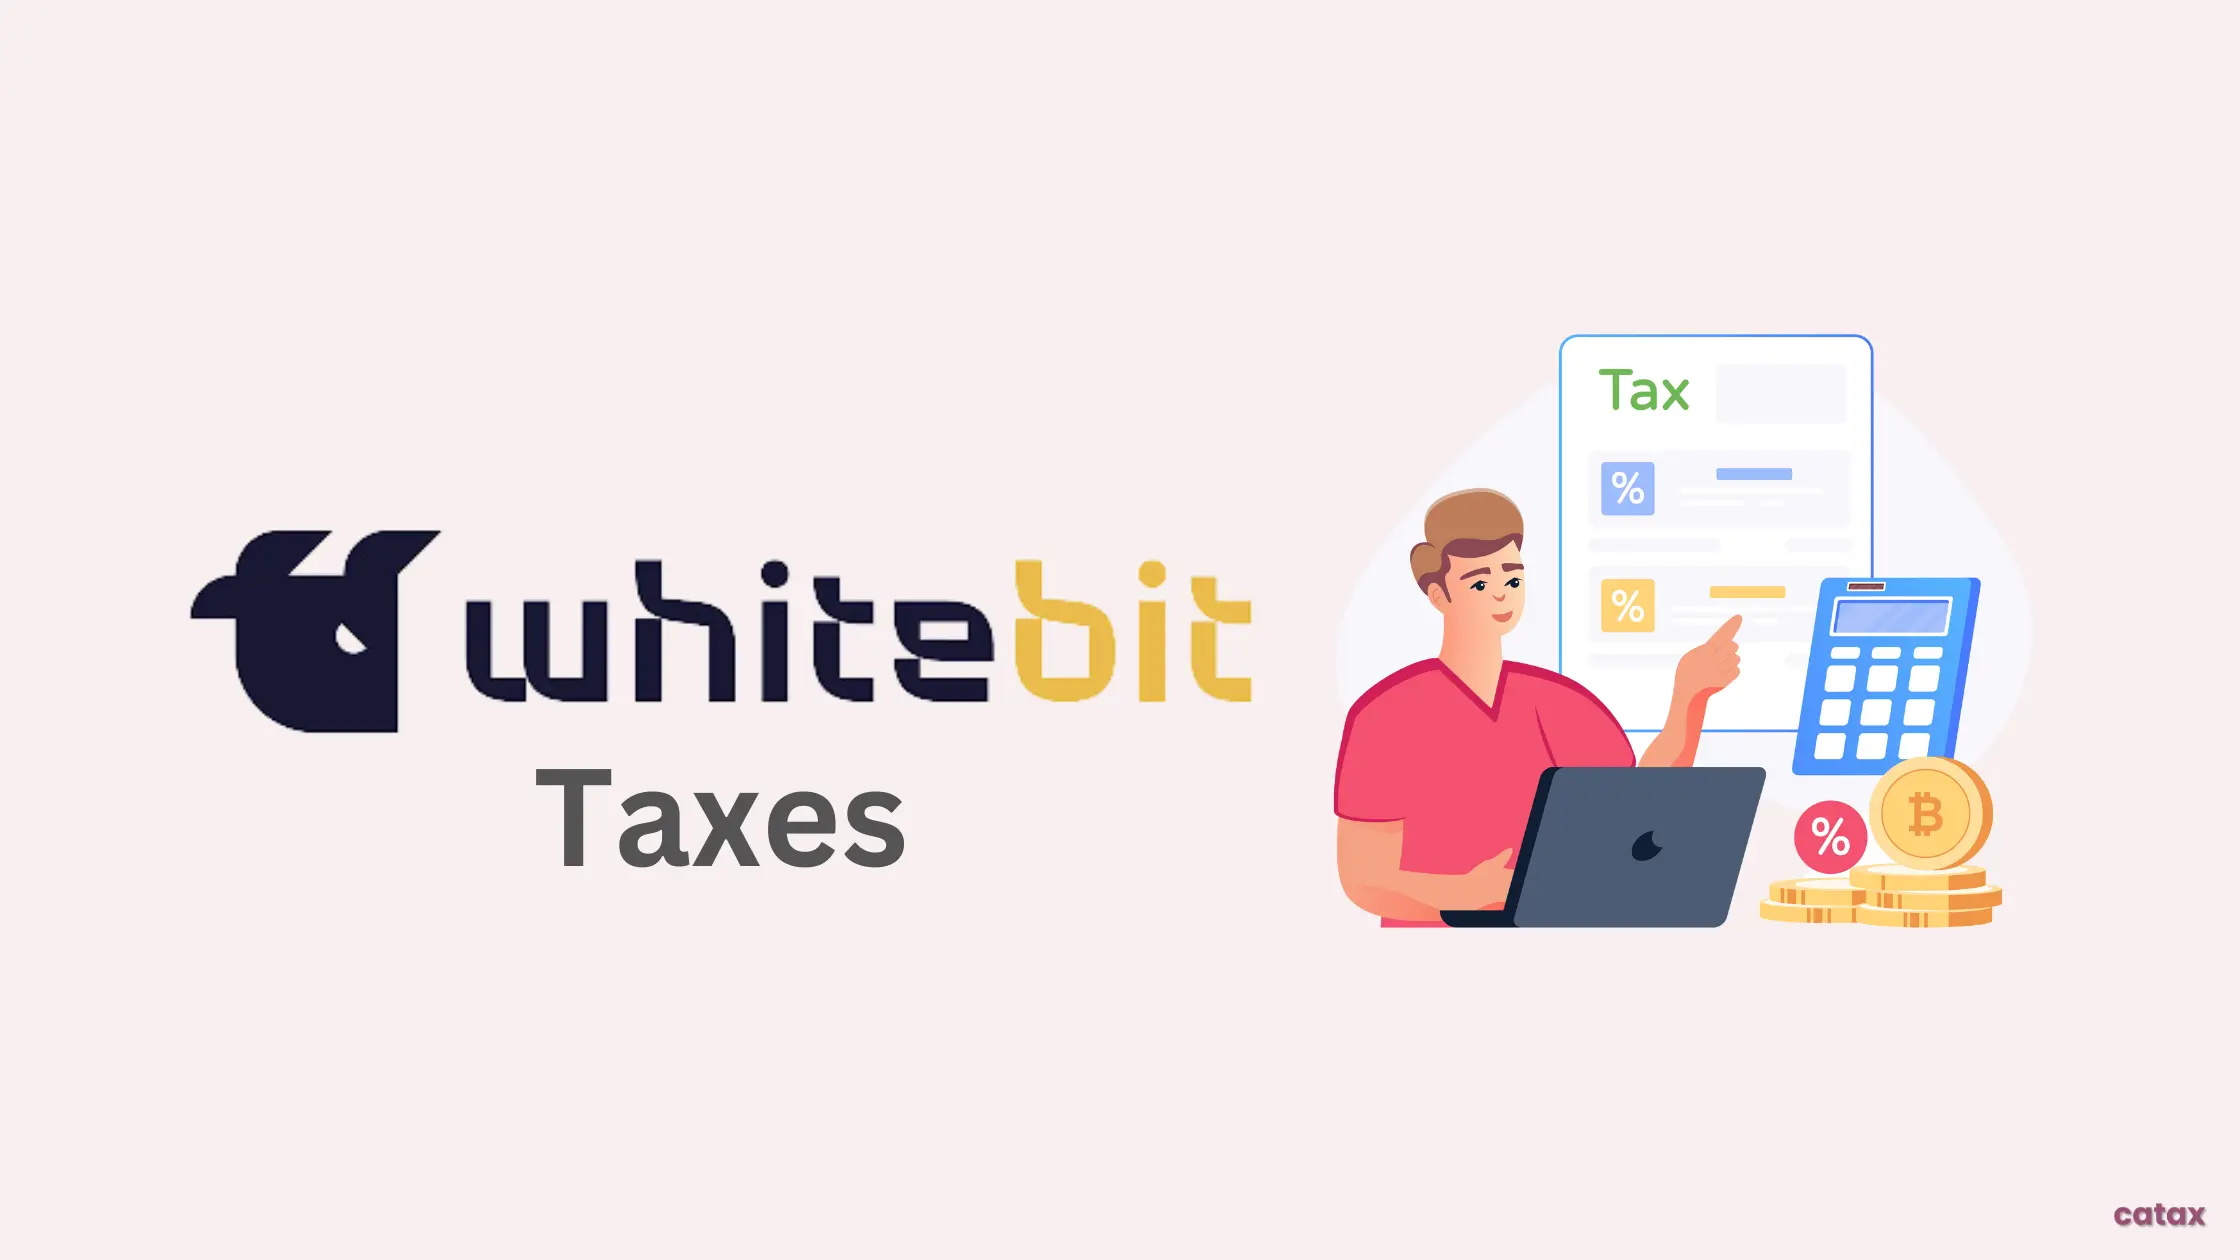 How to Do Your WhiteBIT Taxes?